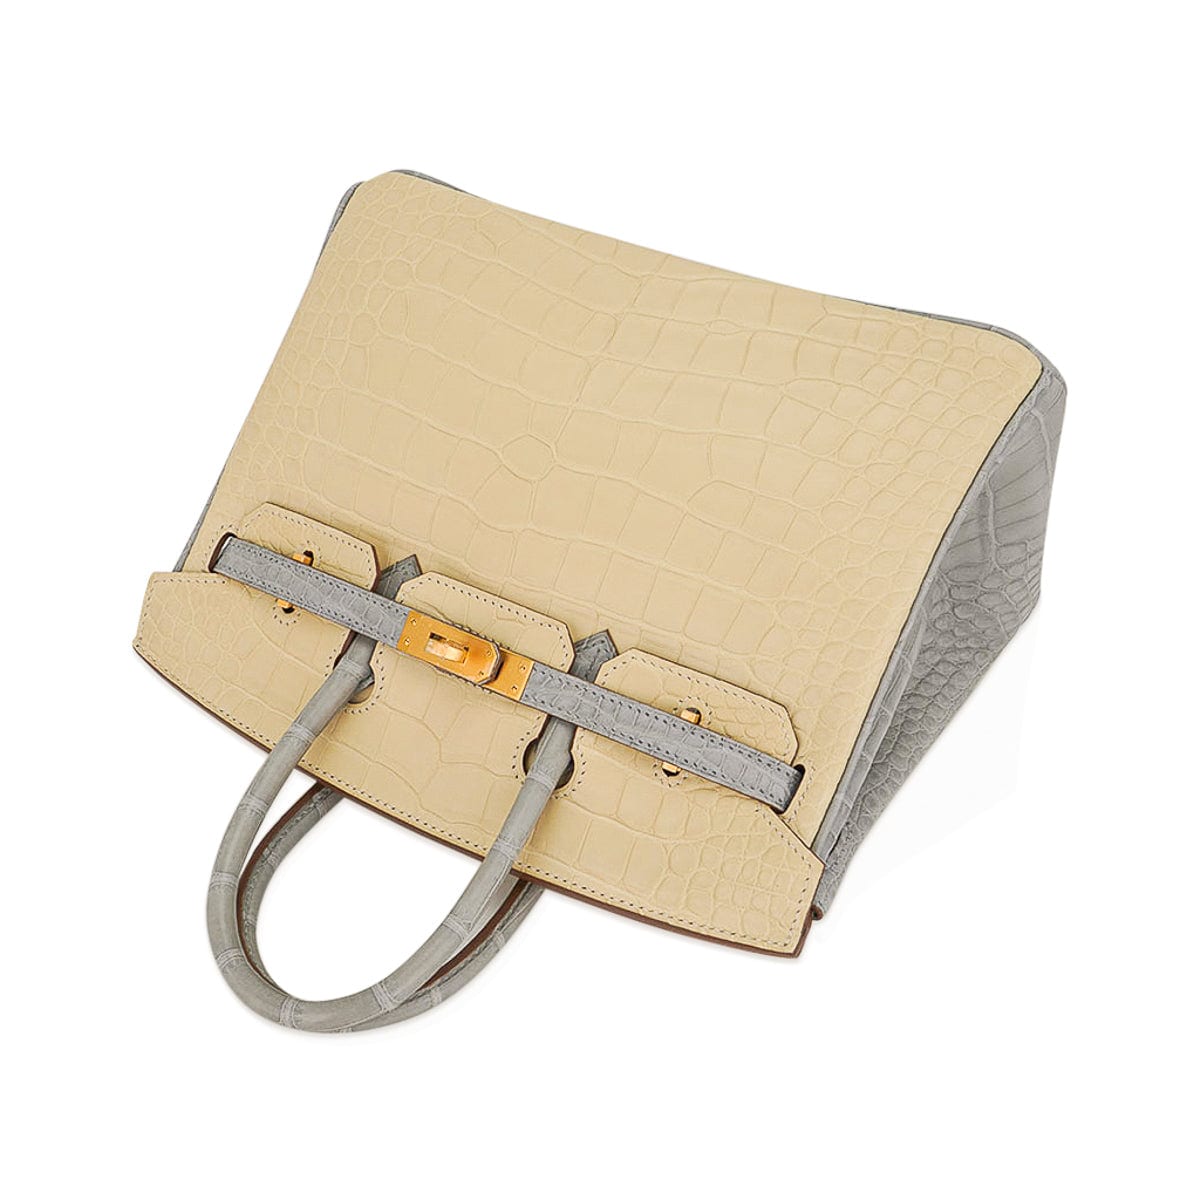 Hermes Birkin 30cm Gris Perle Togo Bag Gold Hardware Pearl Gray